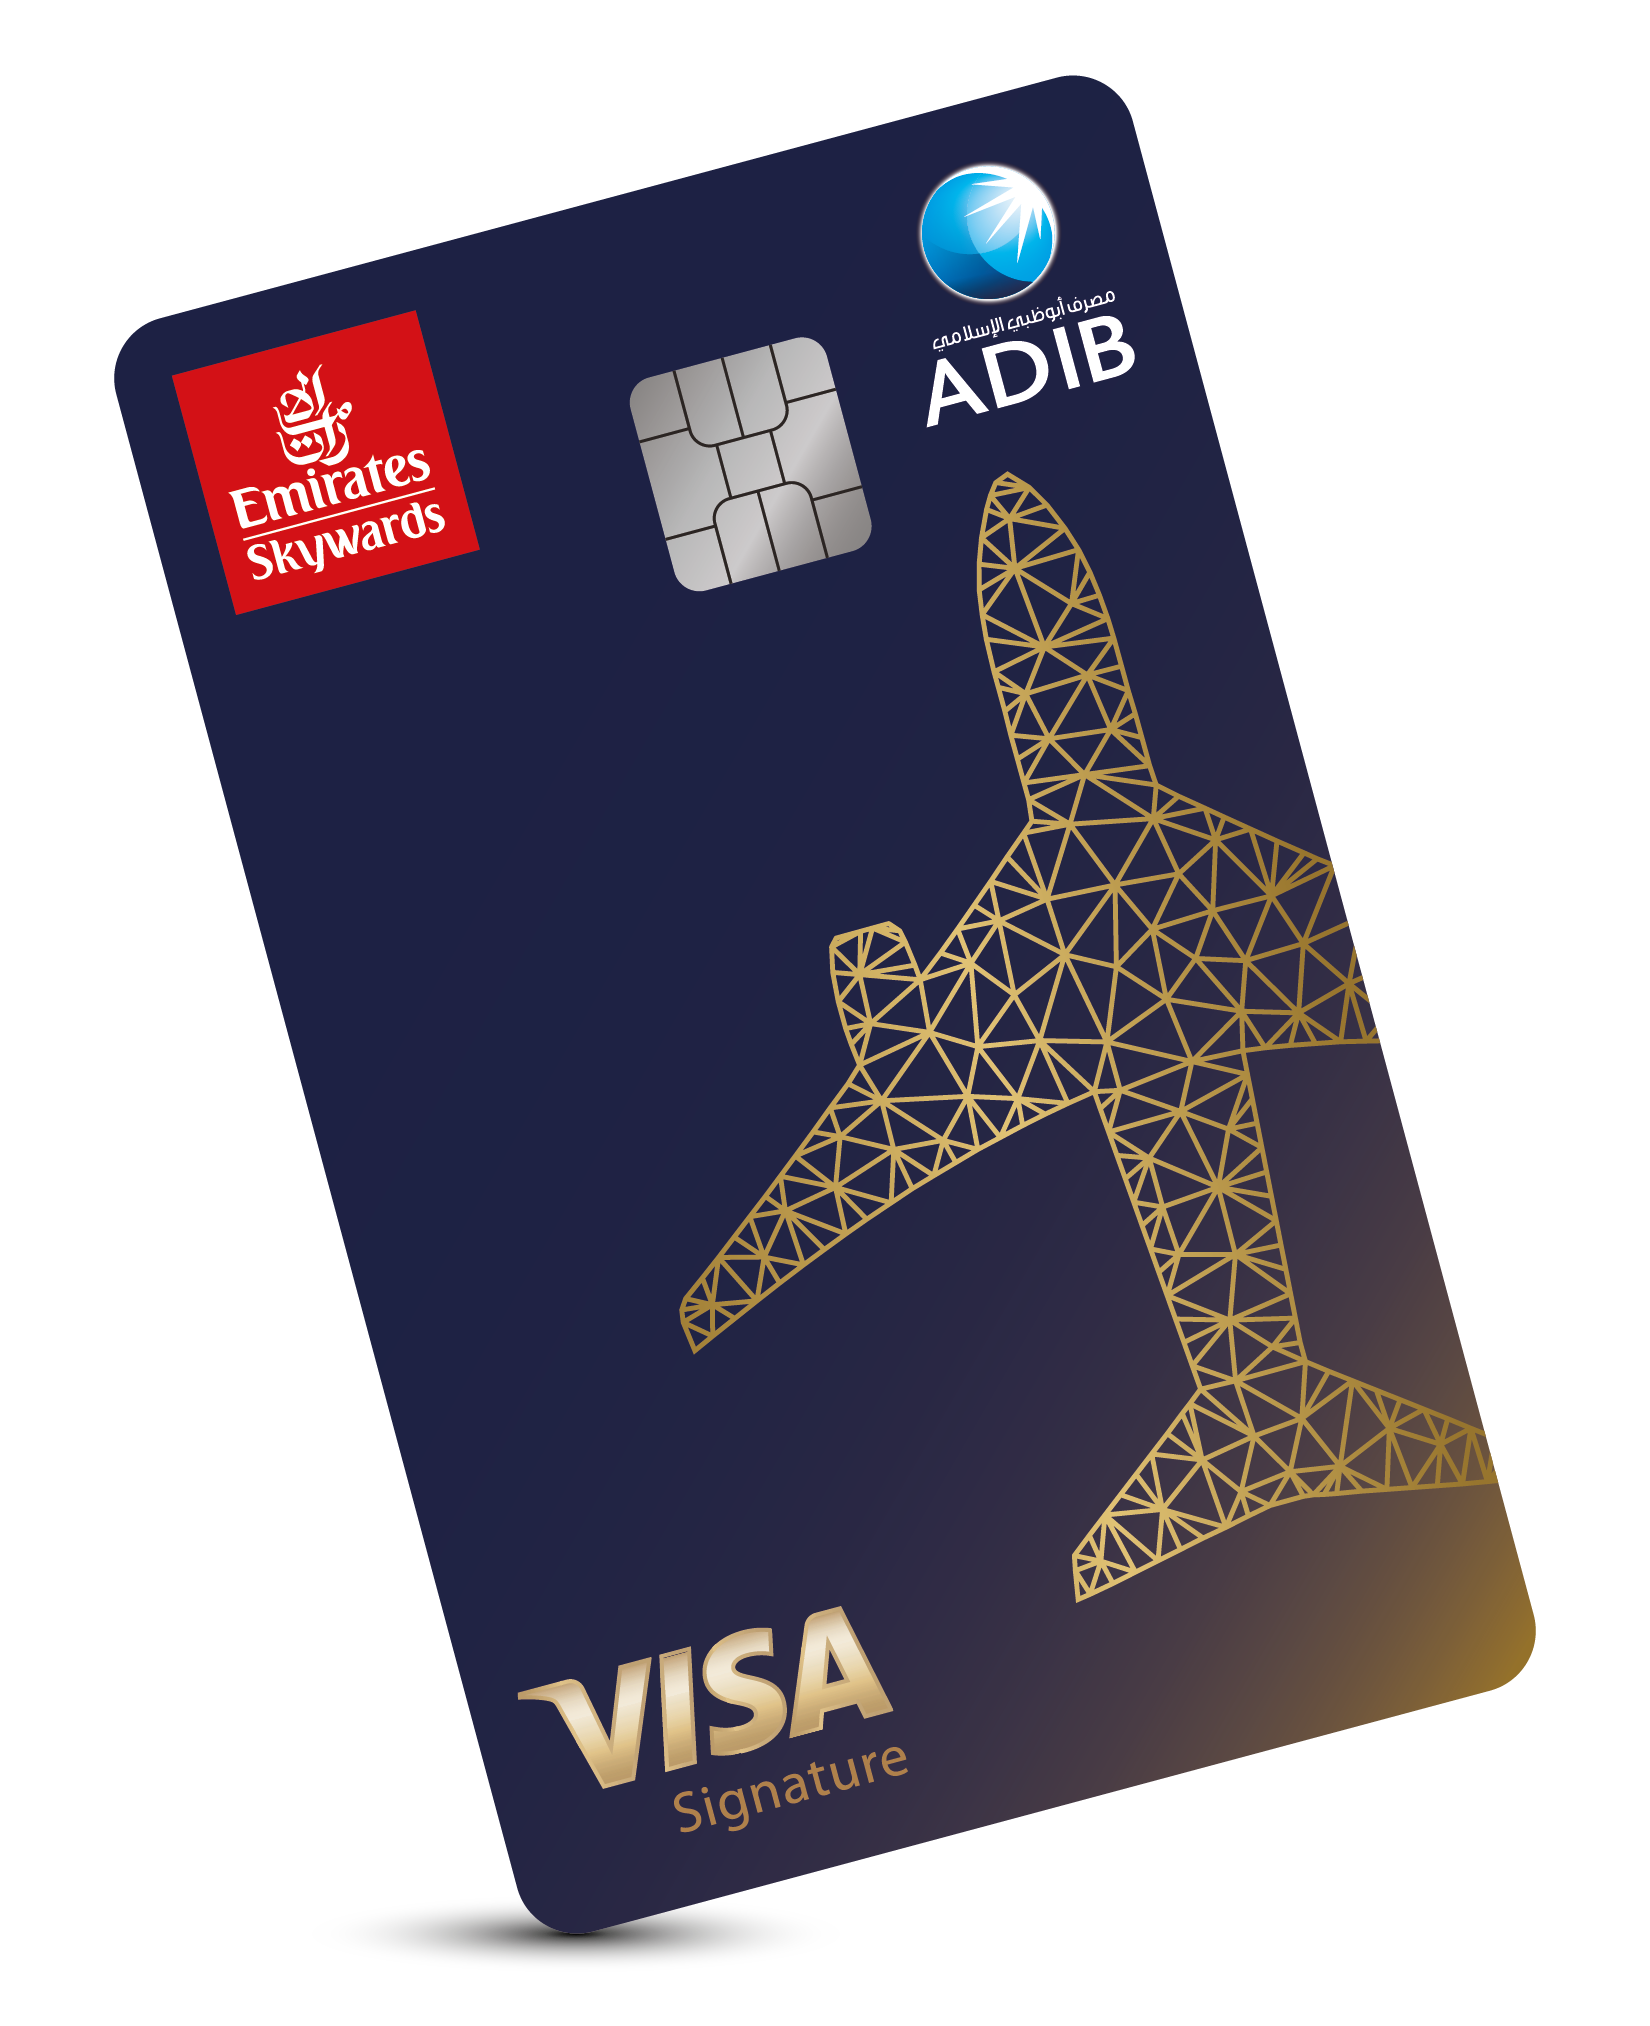 ADIB Emirates Skywards Visa Signature Card